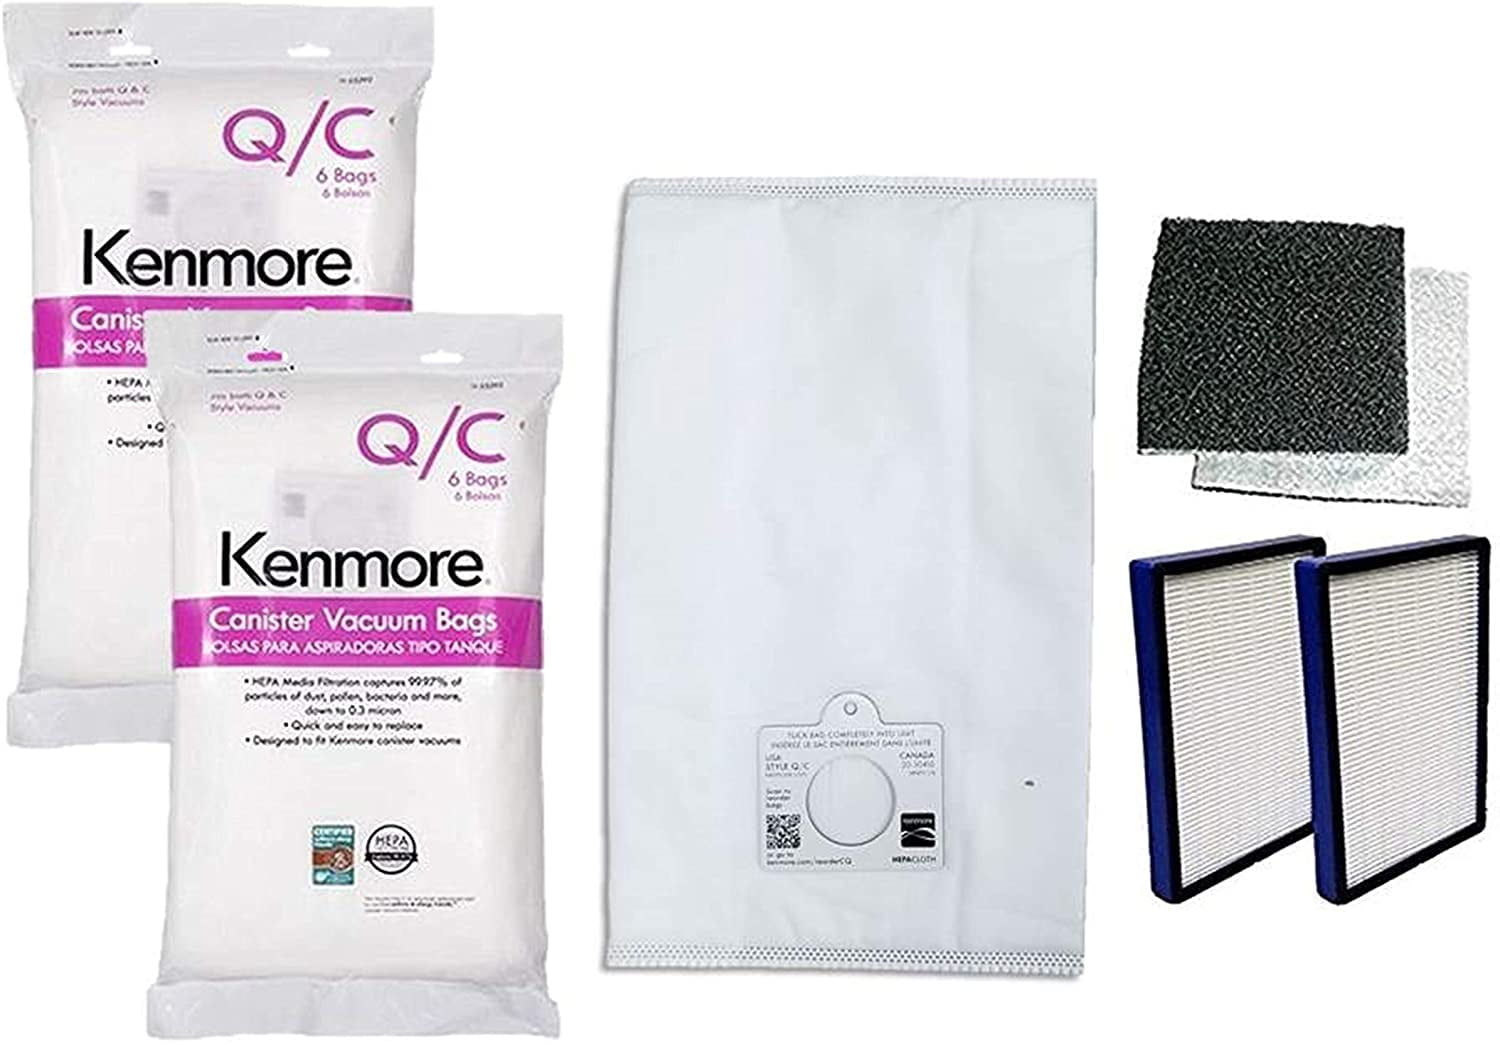 9 Bags for Kenmore Progressive Canister Vacuum Cleaner 5055 C EF1 CF1 Filter Set 